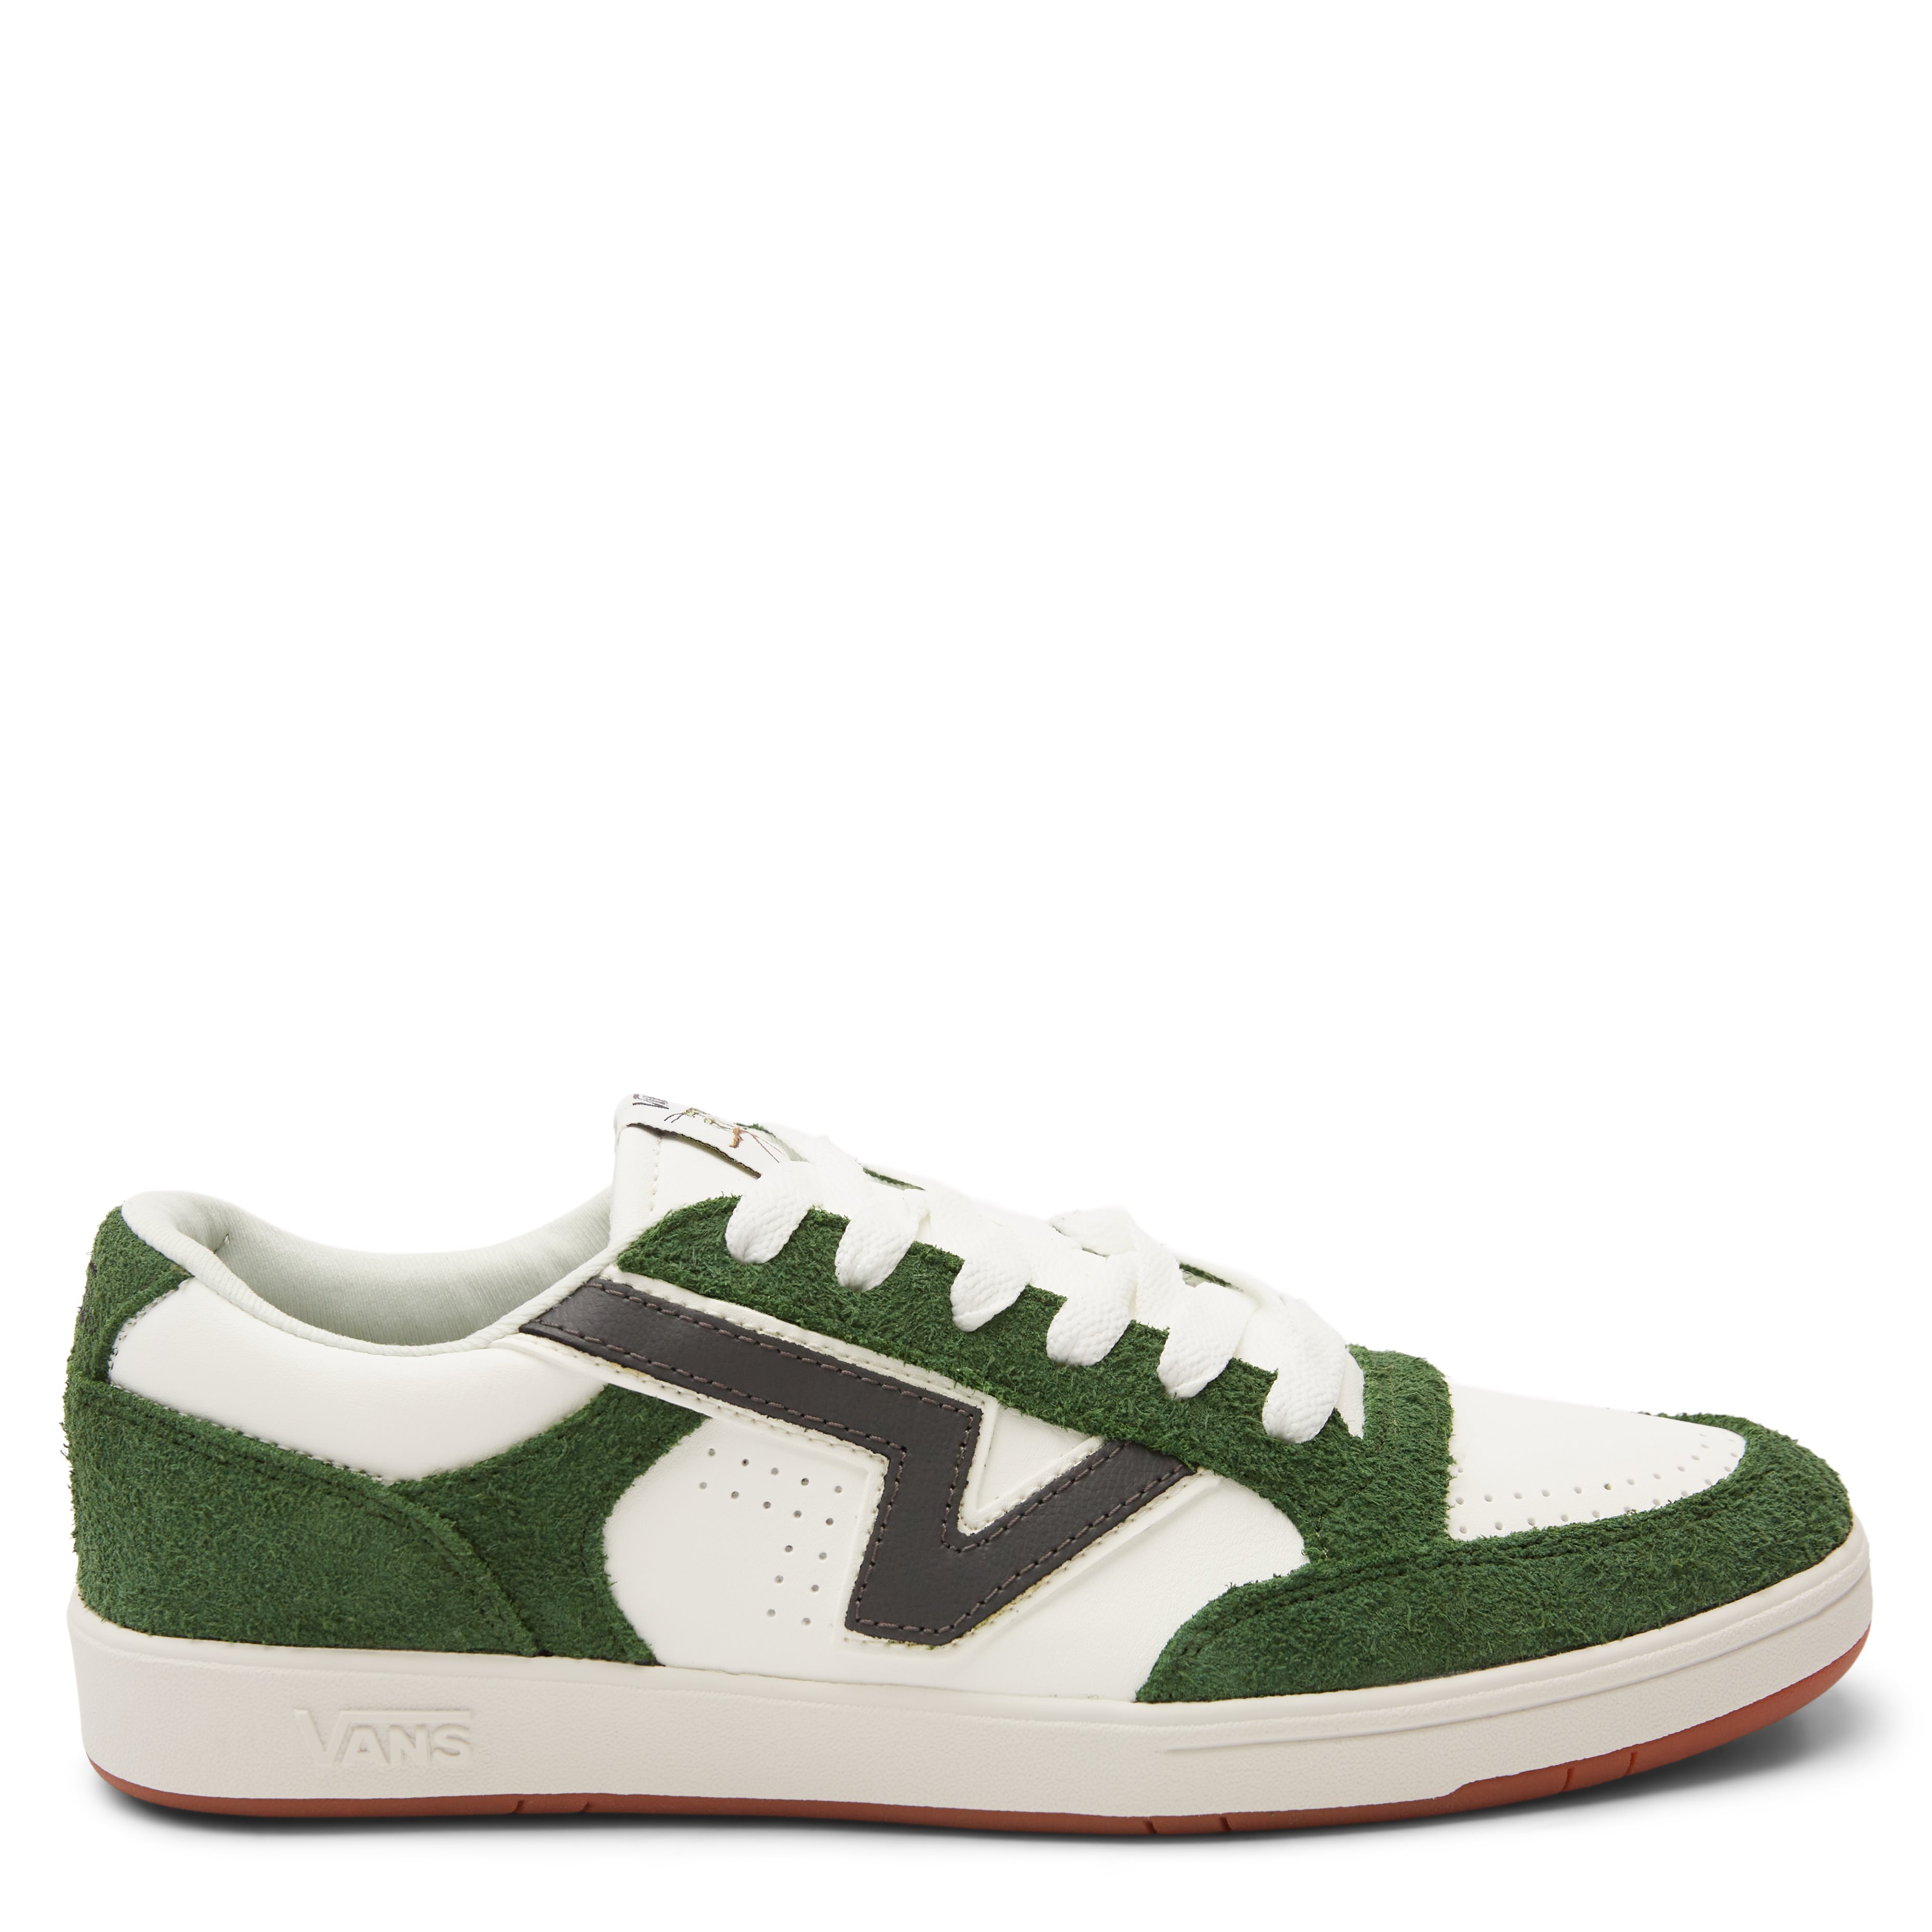 Vans Shoes LOWLAND CC VN0A7TNLLV21 Green